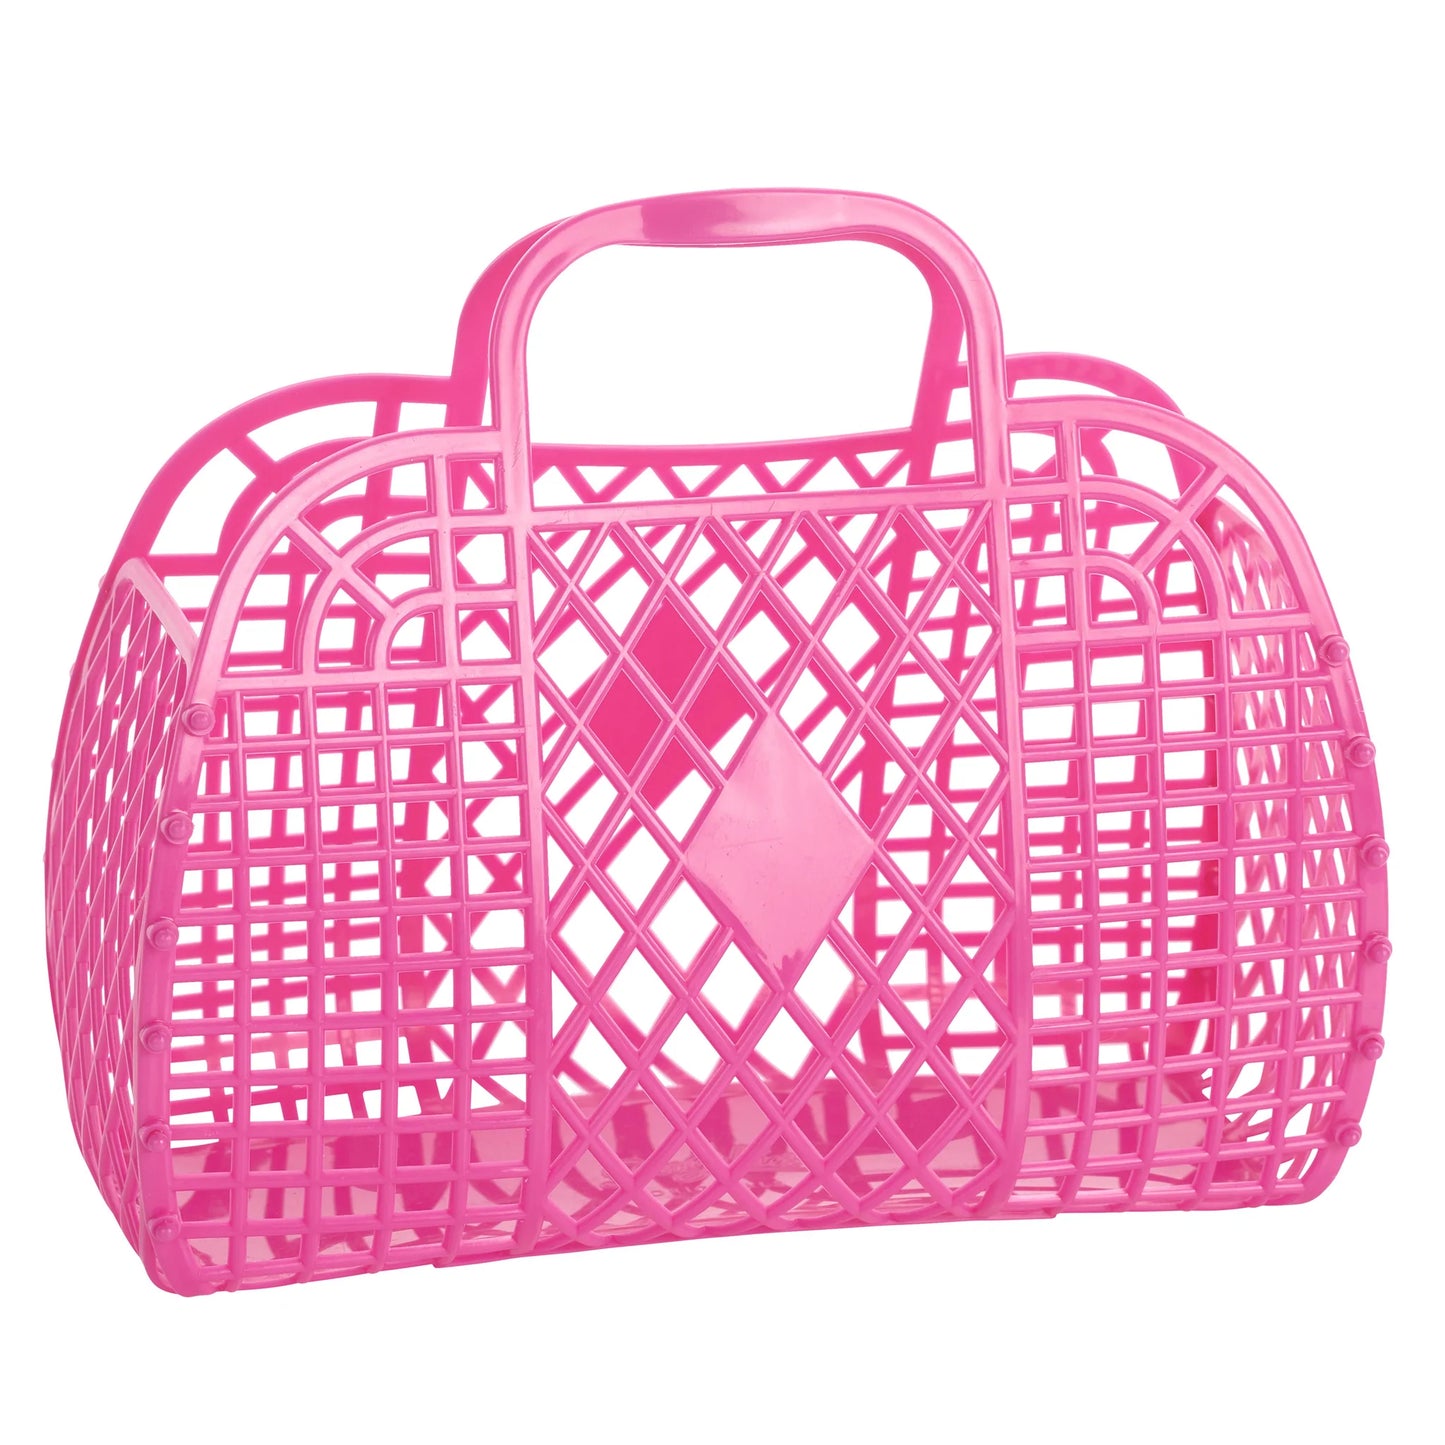 Sun Jellies Retro Basket, Berry Pink